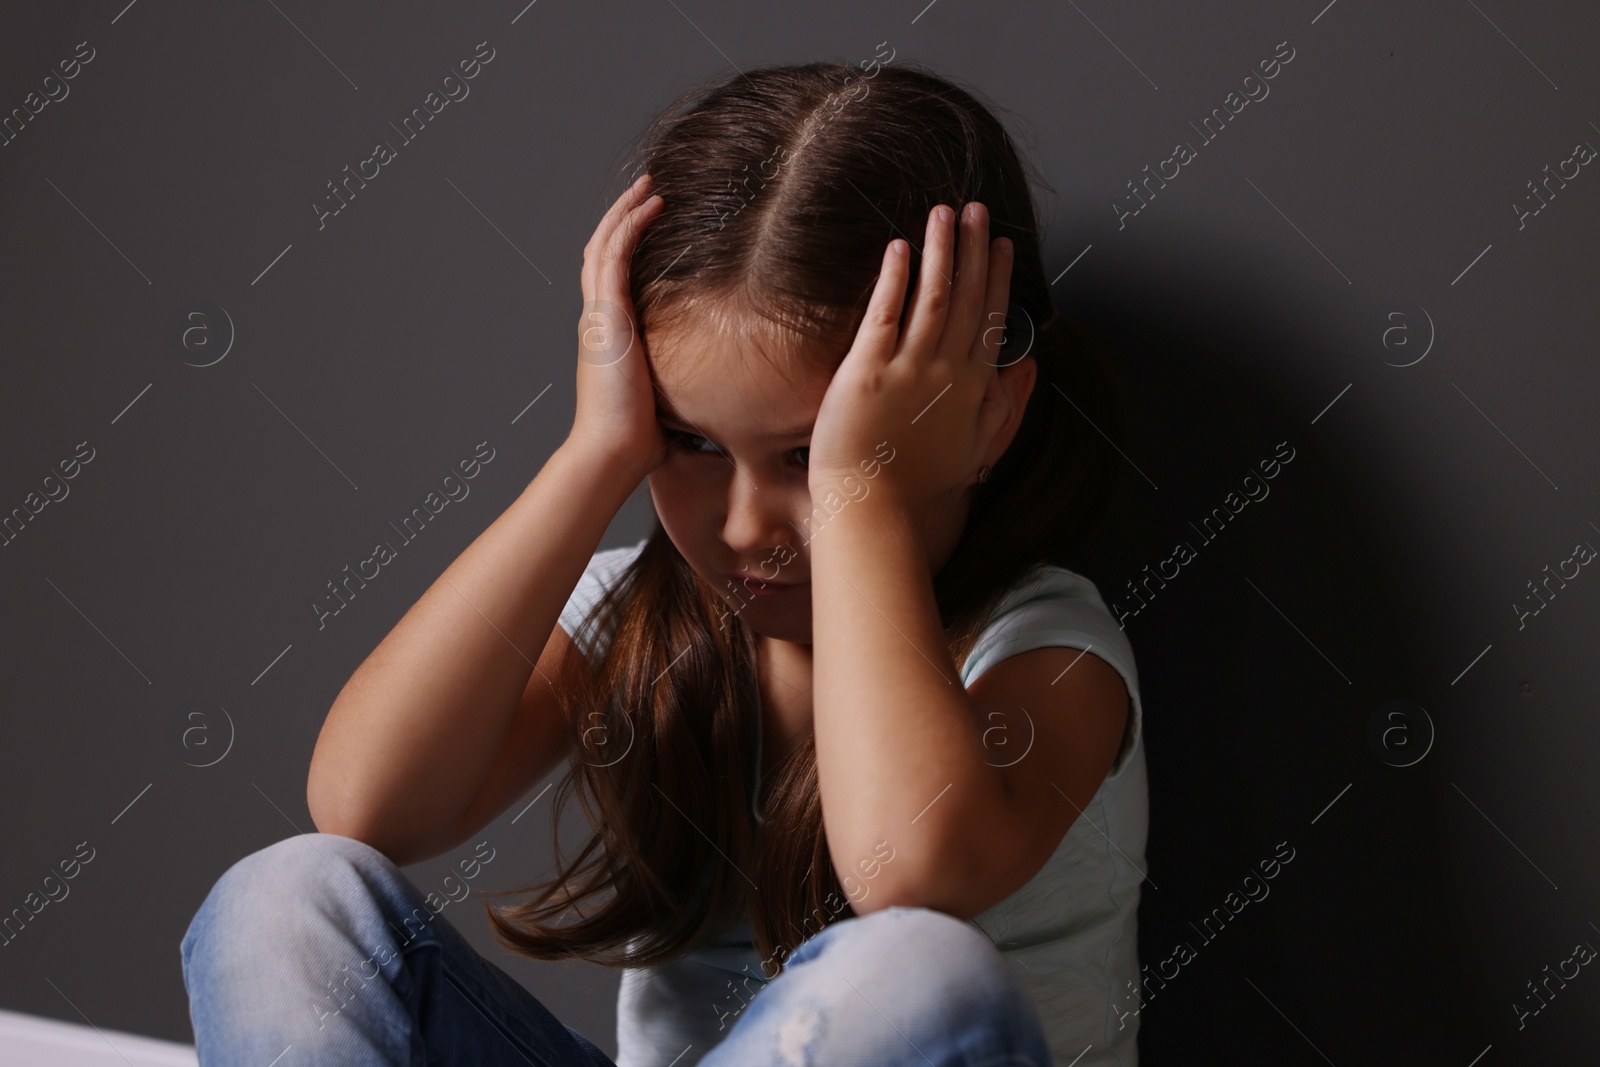 Photo of Child abuse. Upset little girl near gray wall